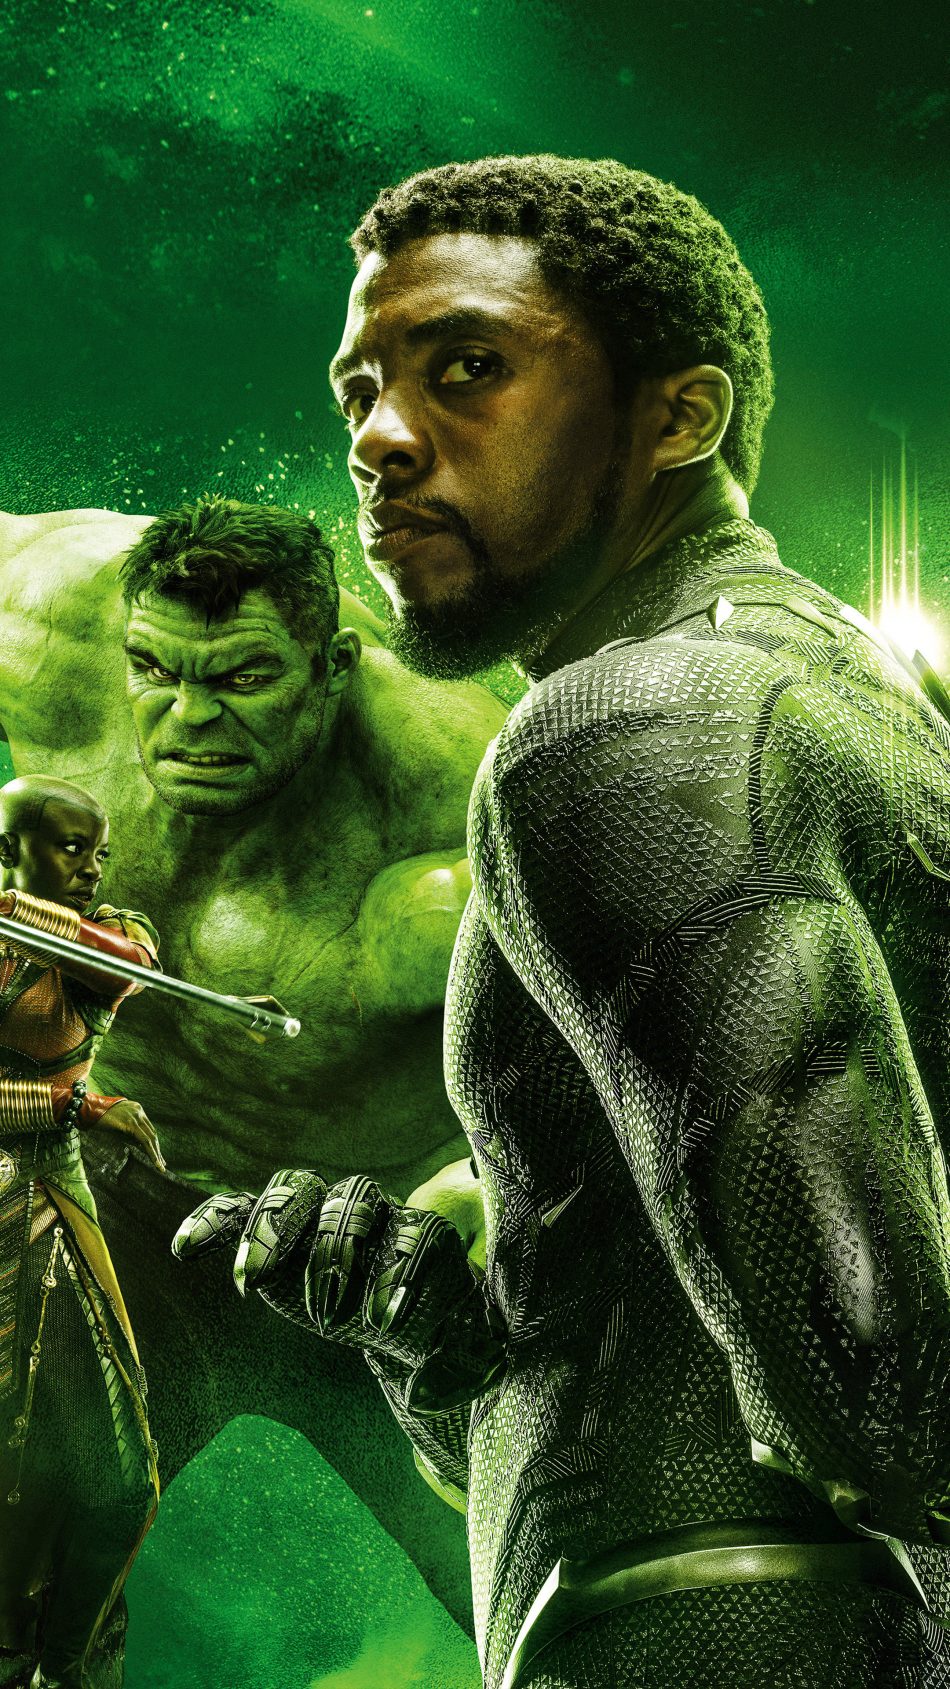 Hulk & Black Panther In Avengers Endgame 4k Ultra Hd - Black Panther Endgame Avengers - HD Wallpaper 